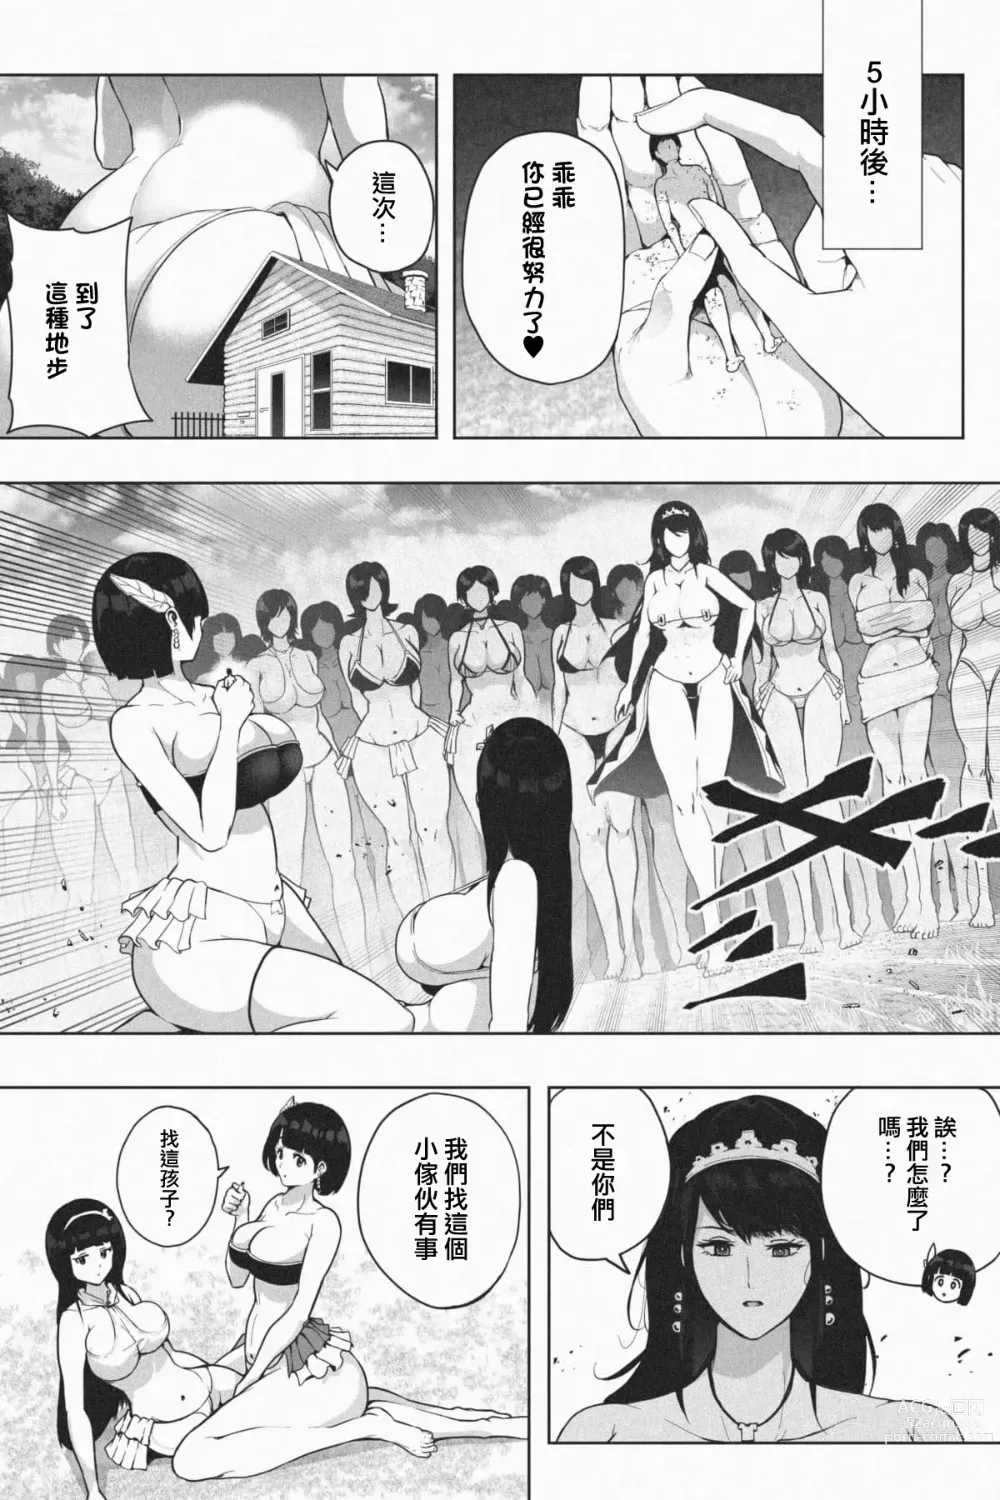 Page 21 of doujinshi 歡迎來到巨人島